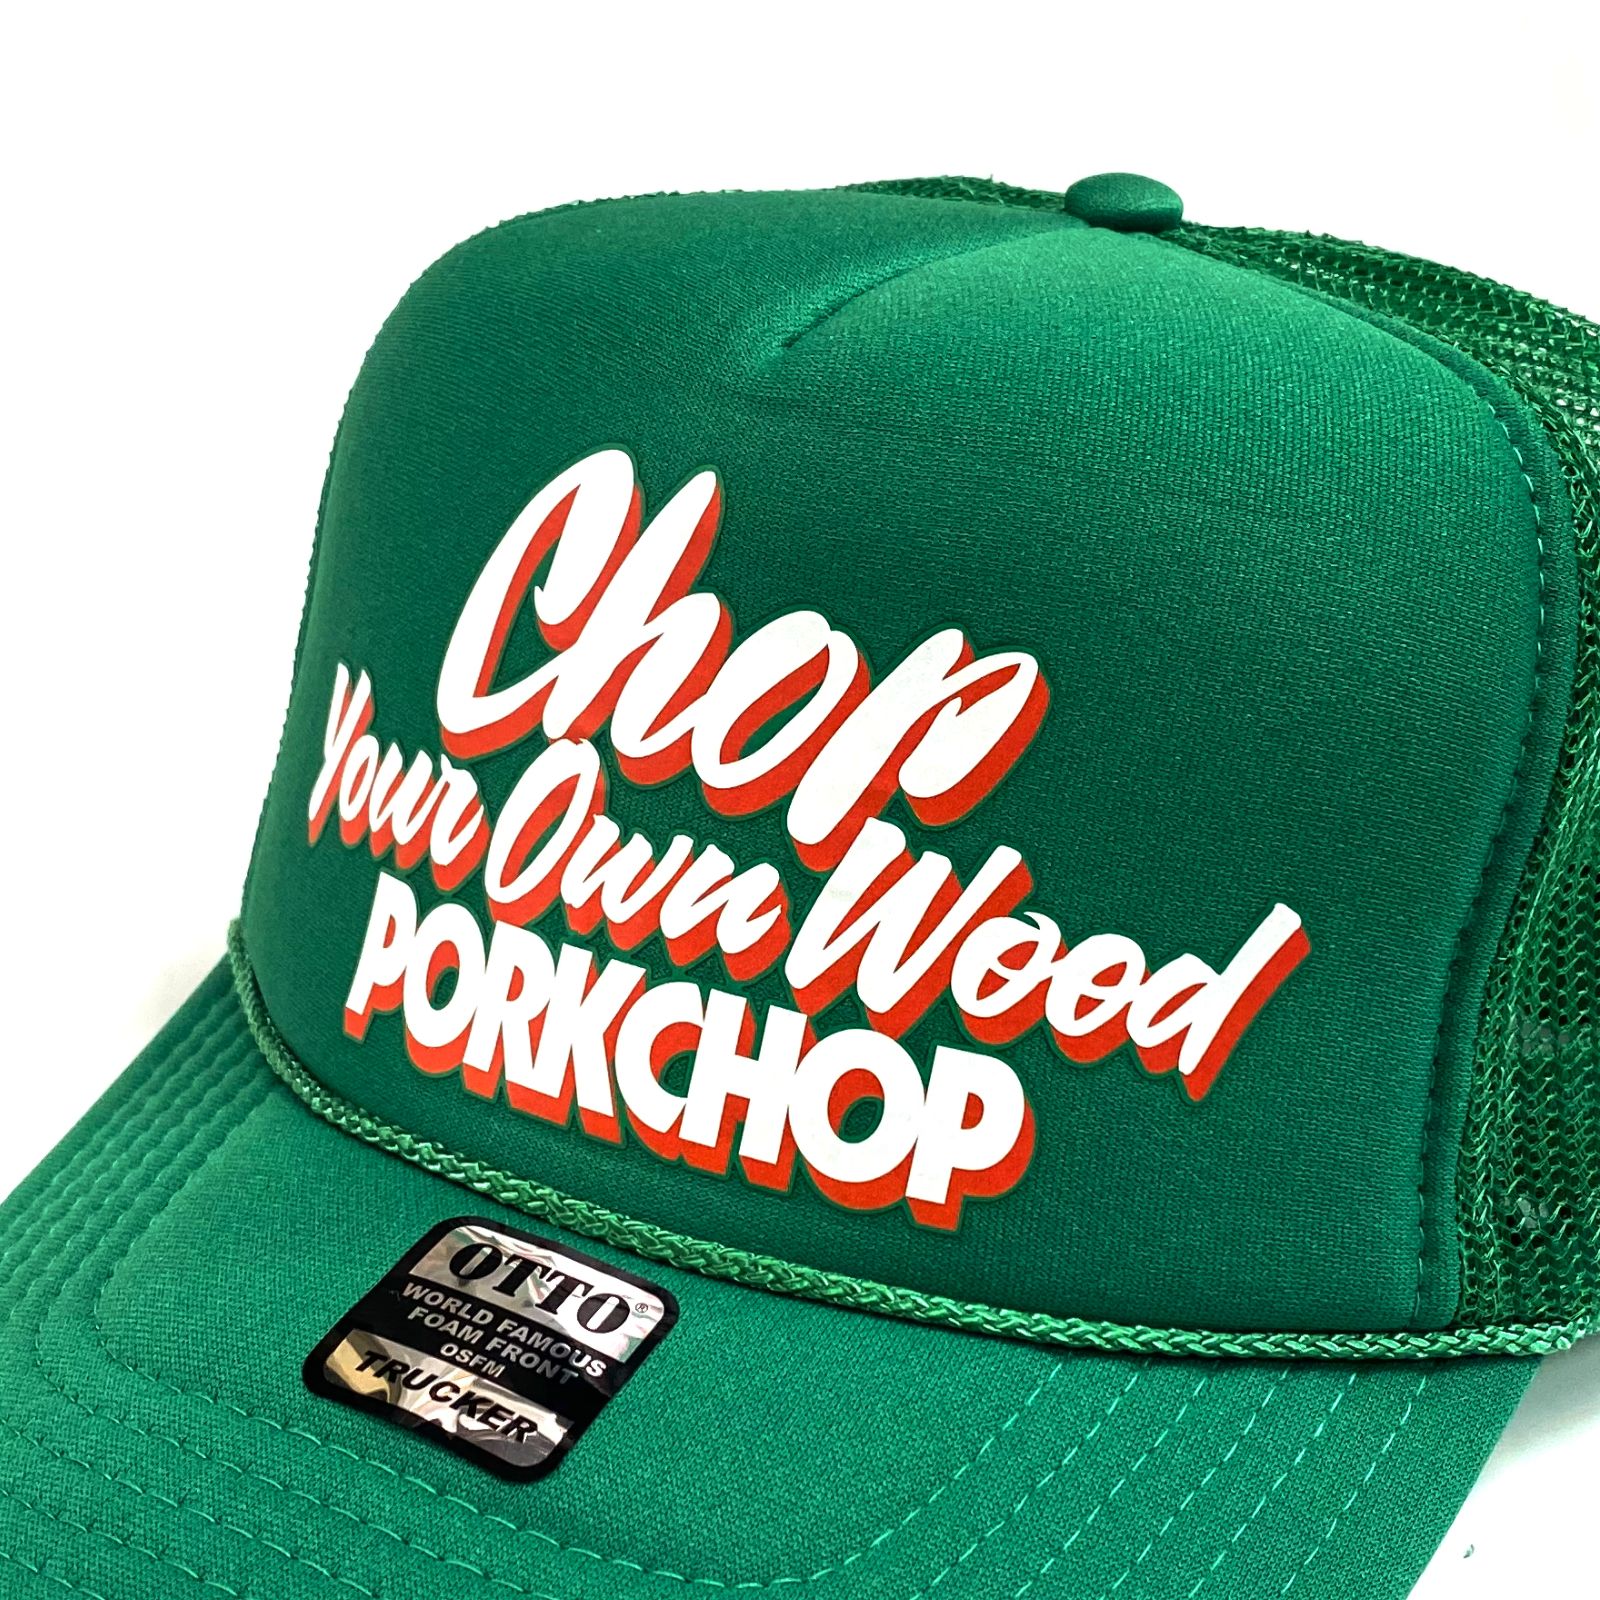 PORKCHOP - CHOP YOUR OWN WOOD CAP (KELLY GREEN) / プリントメッシュ